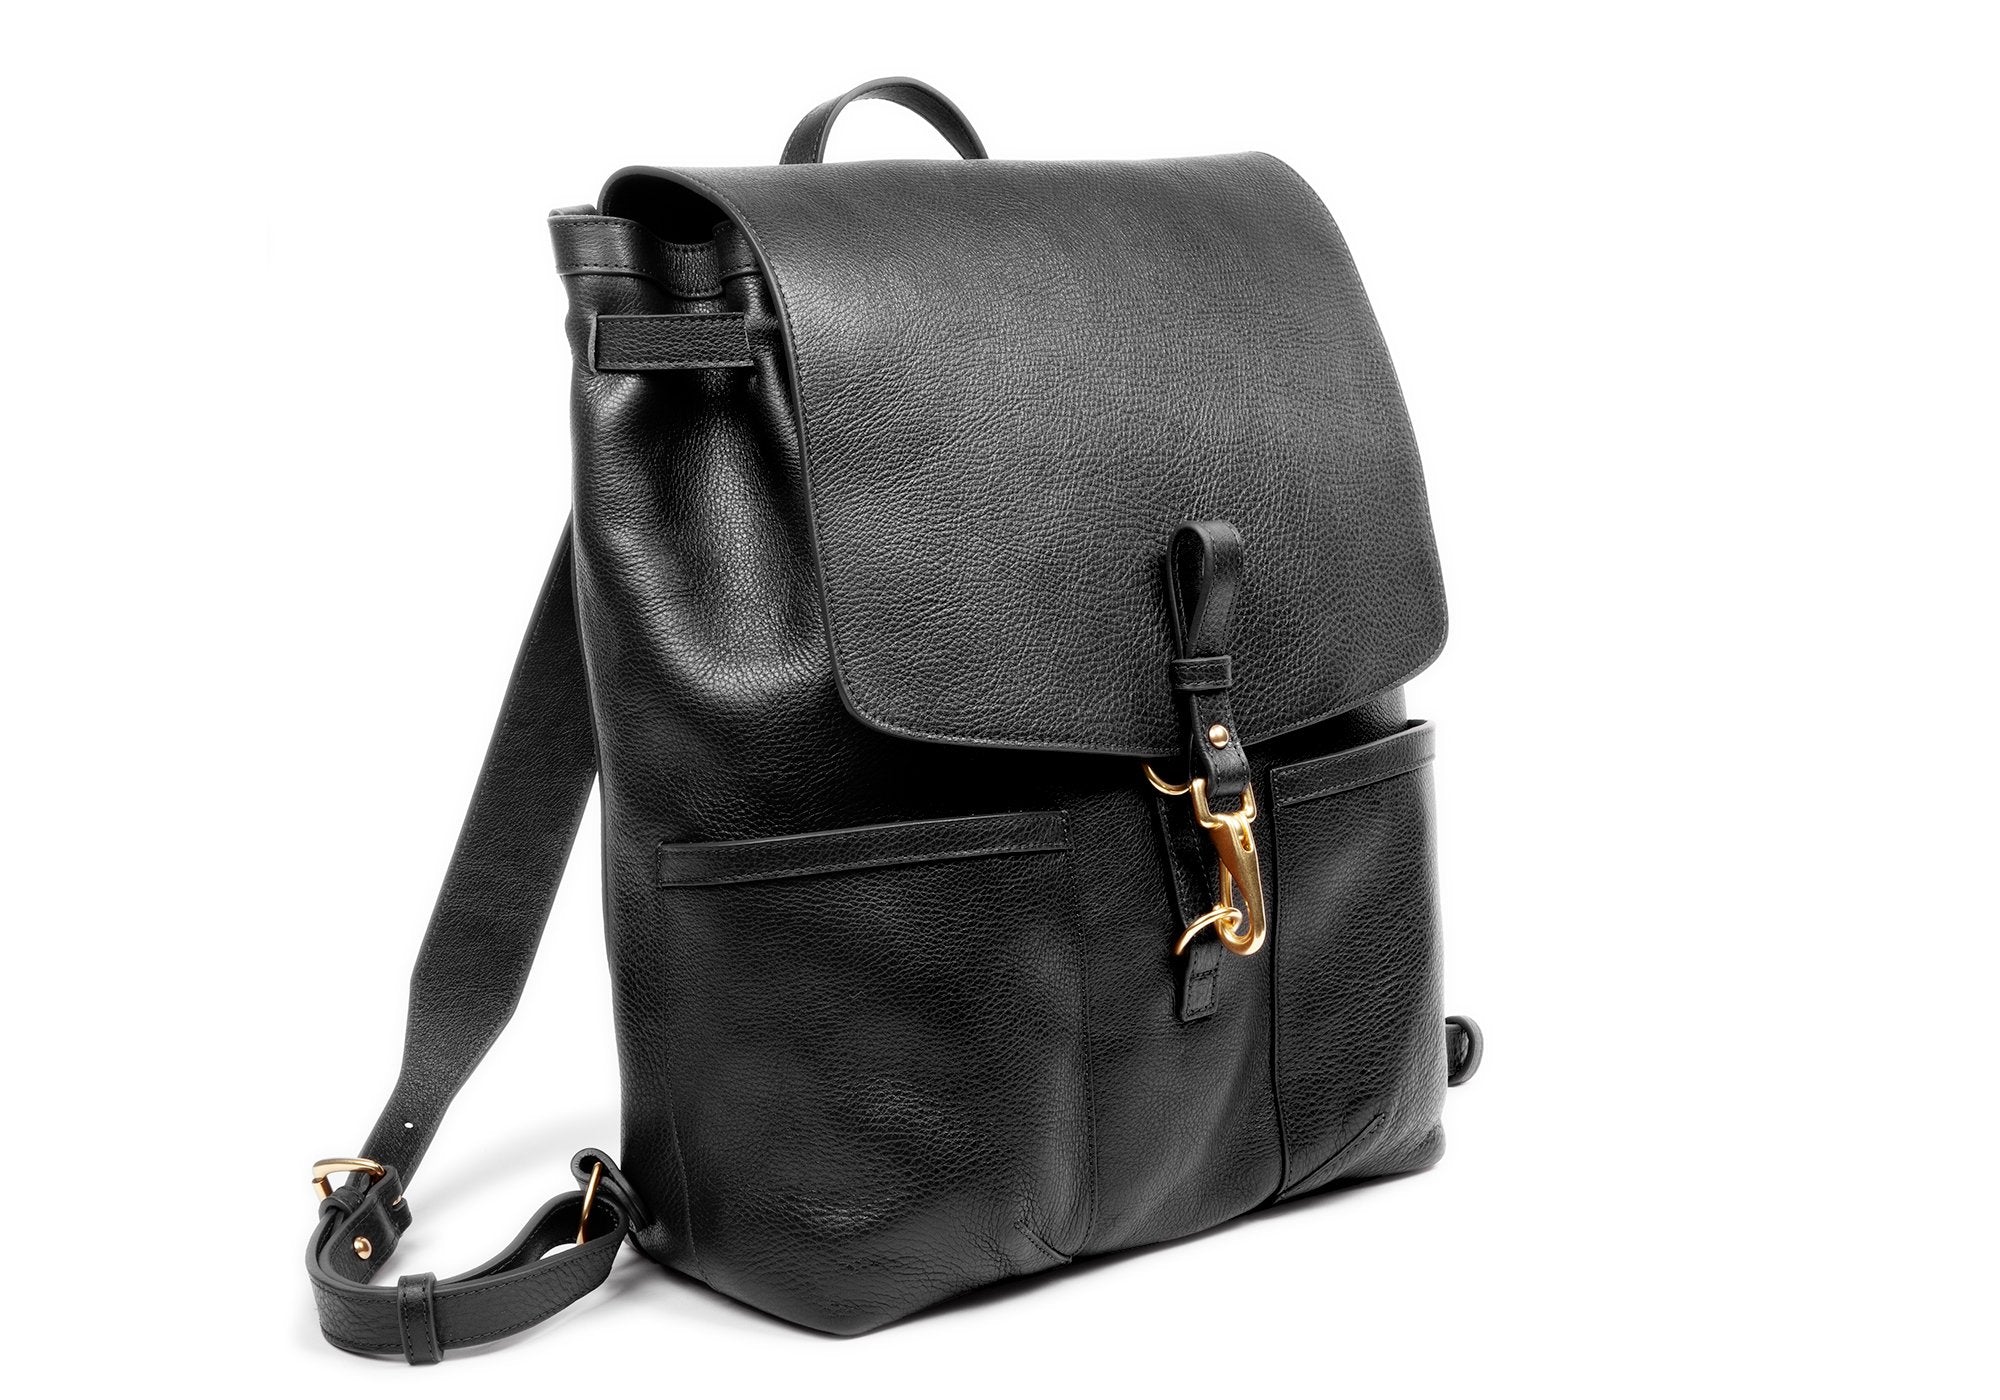 Knapsack Black - Gillis London, Multi-functional Leather Camera Bags